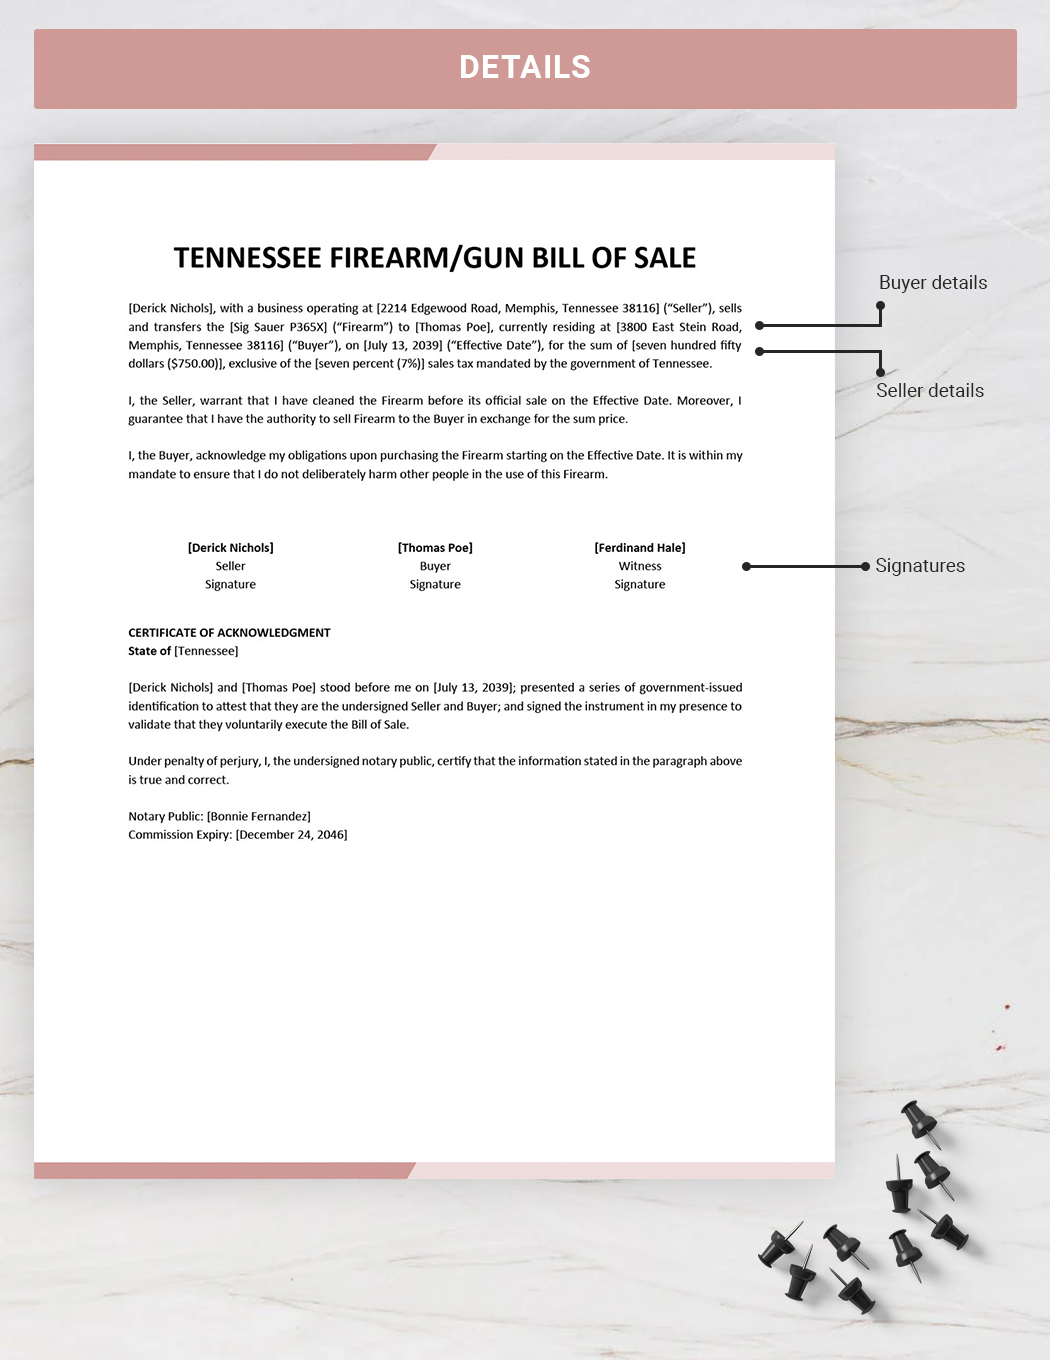 Tennessee Firearm/Gun Bill of Sale Template